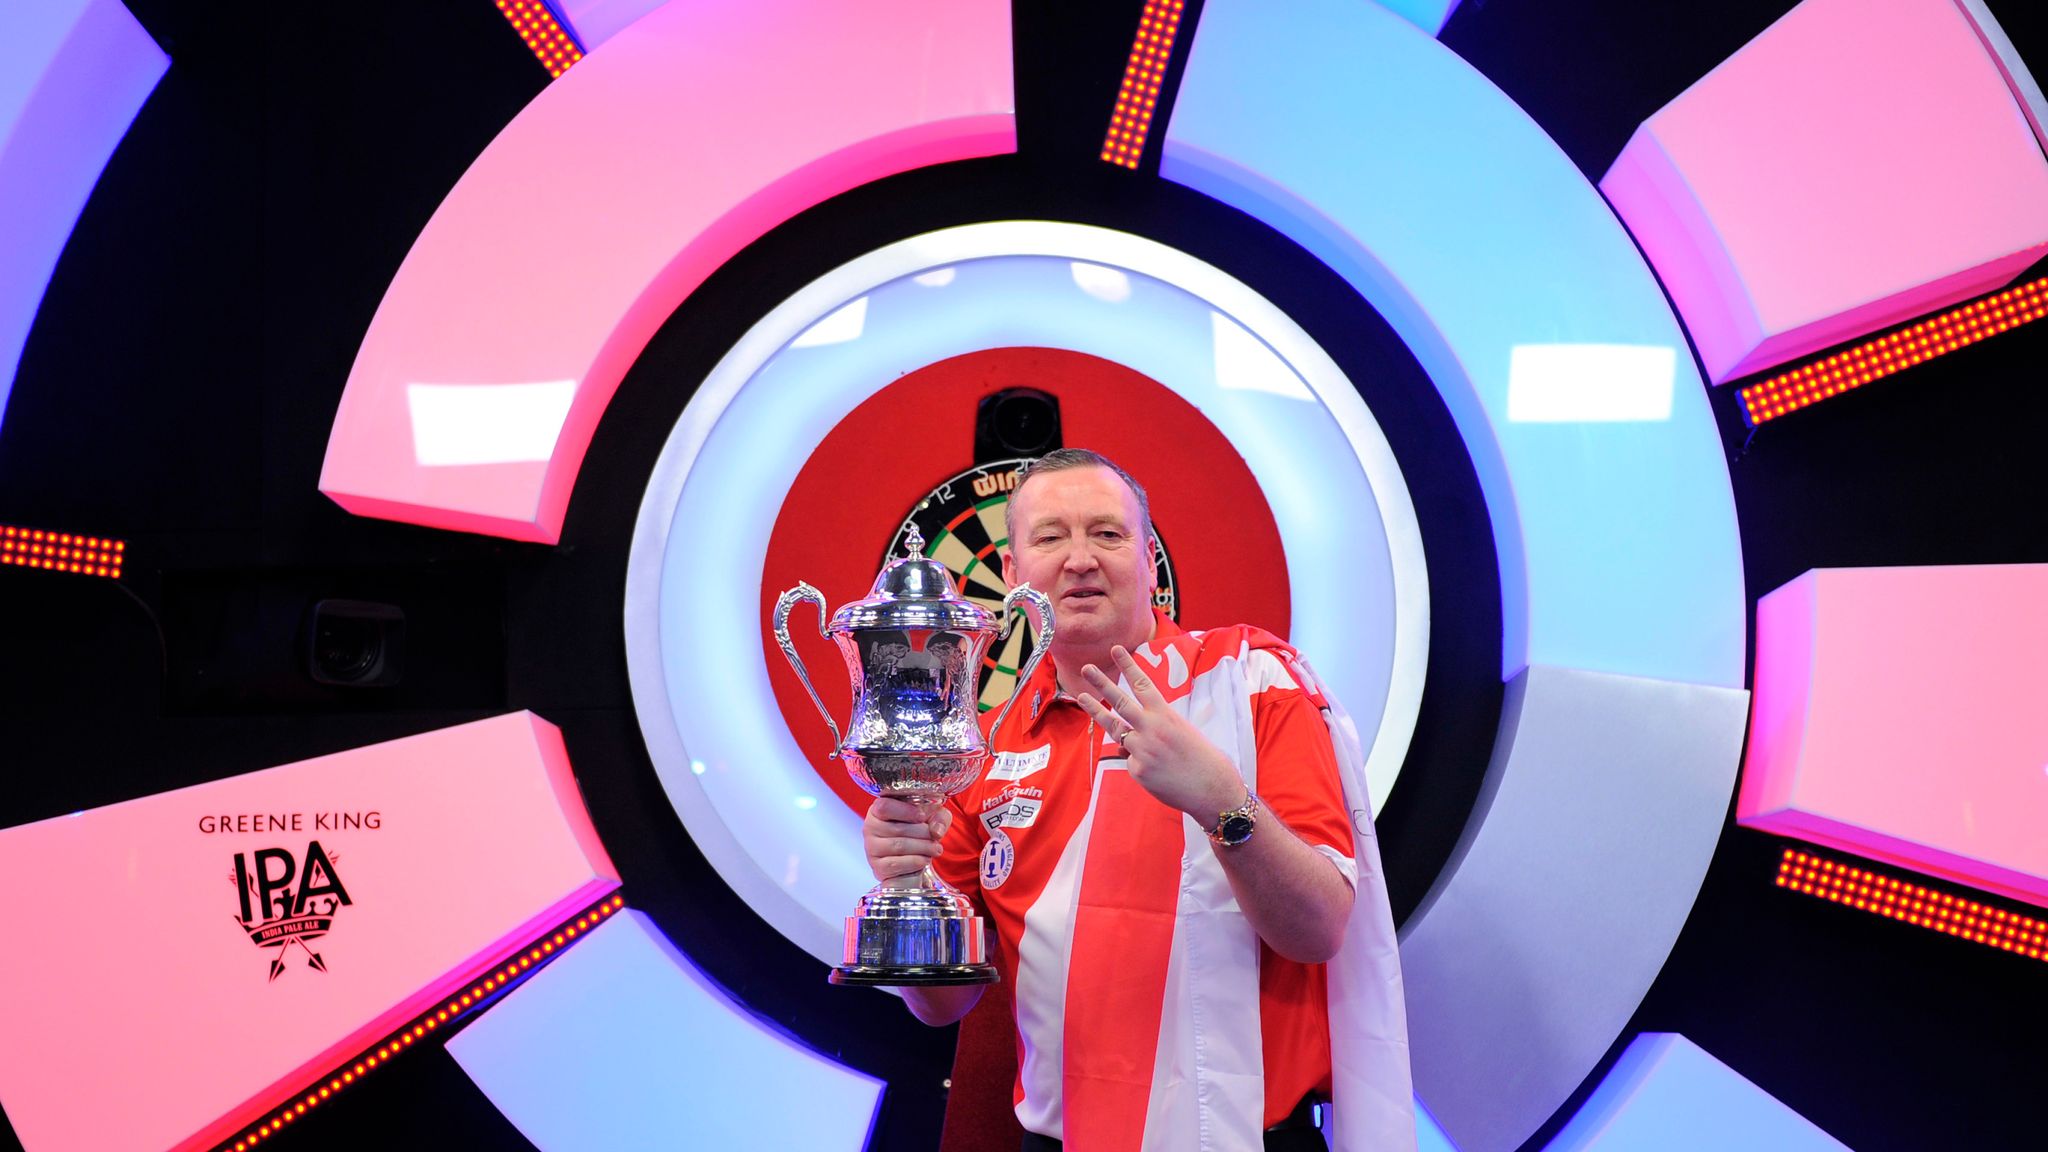 Glen Durrant wins BDO World Championship for third successive year | Darts News | Sports